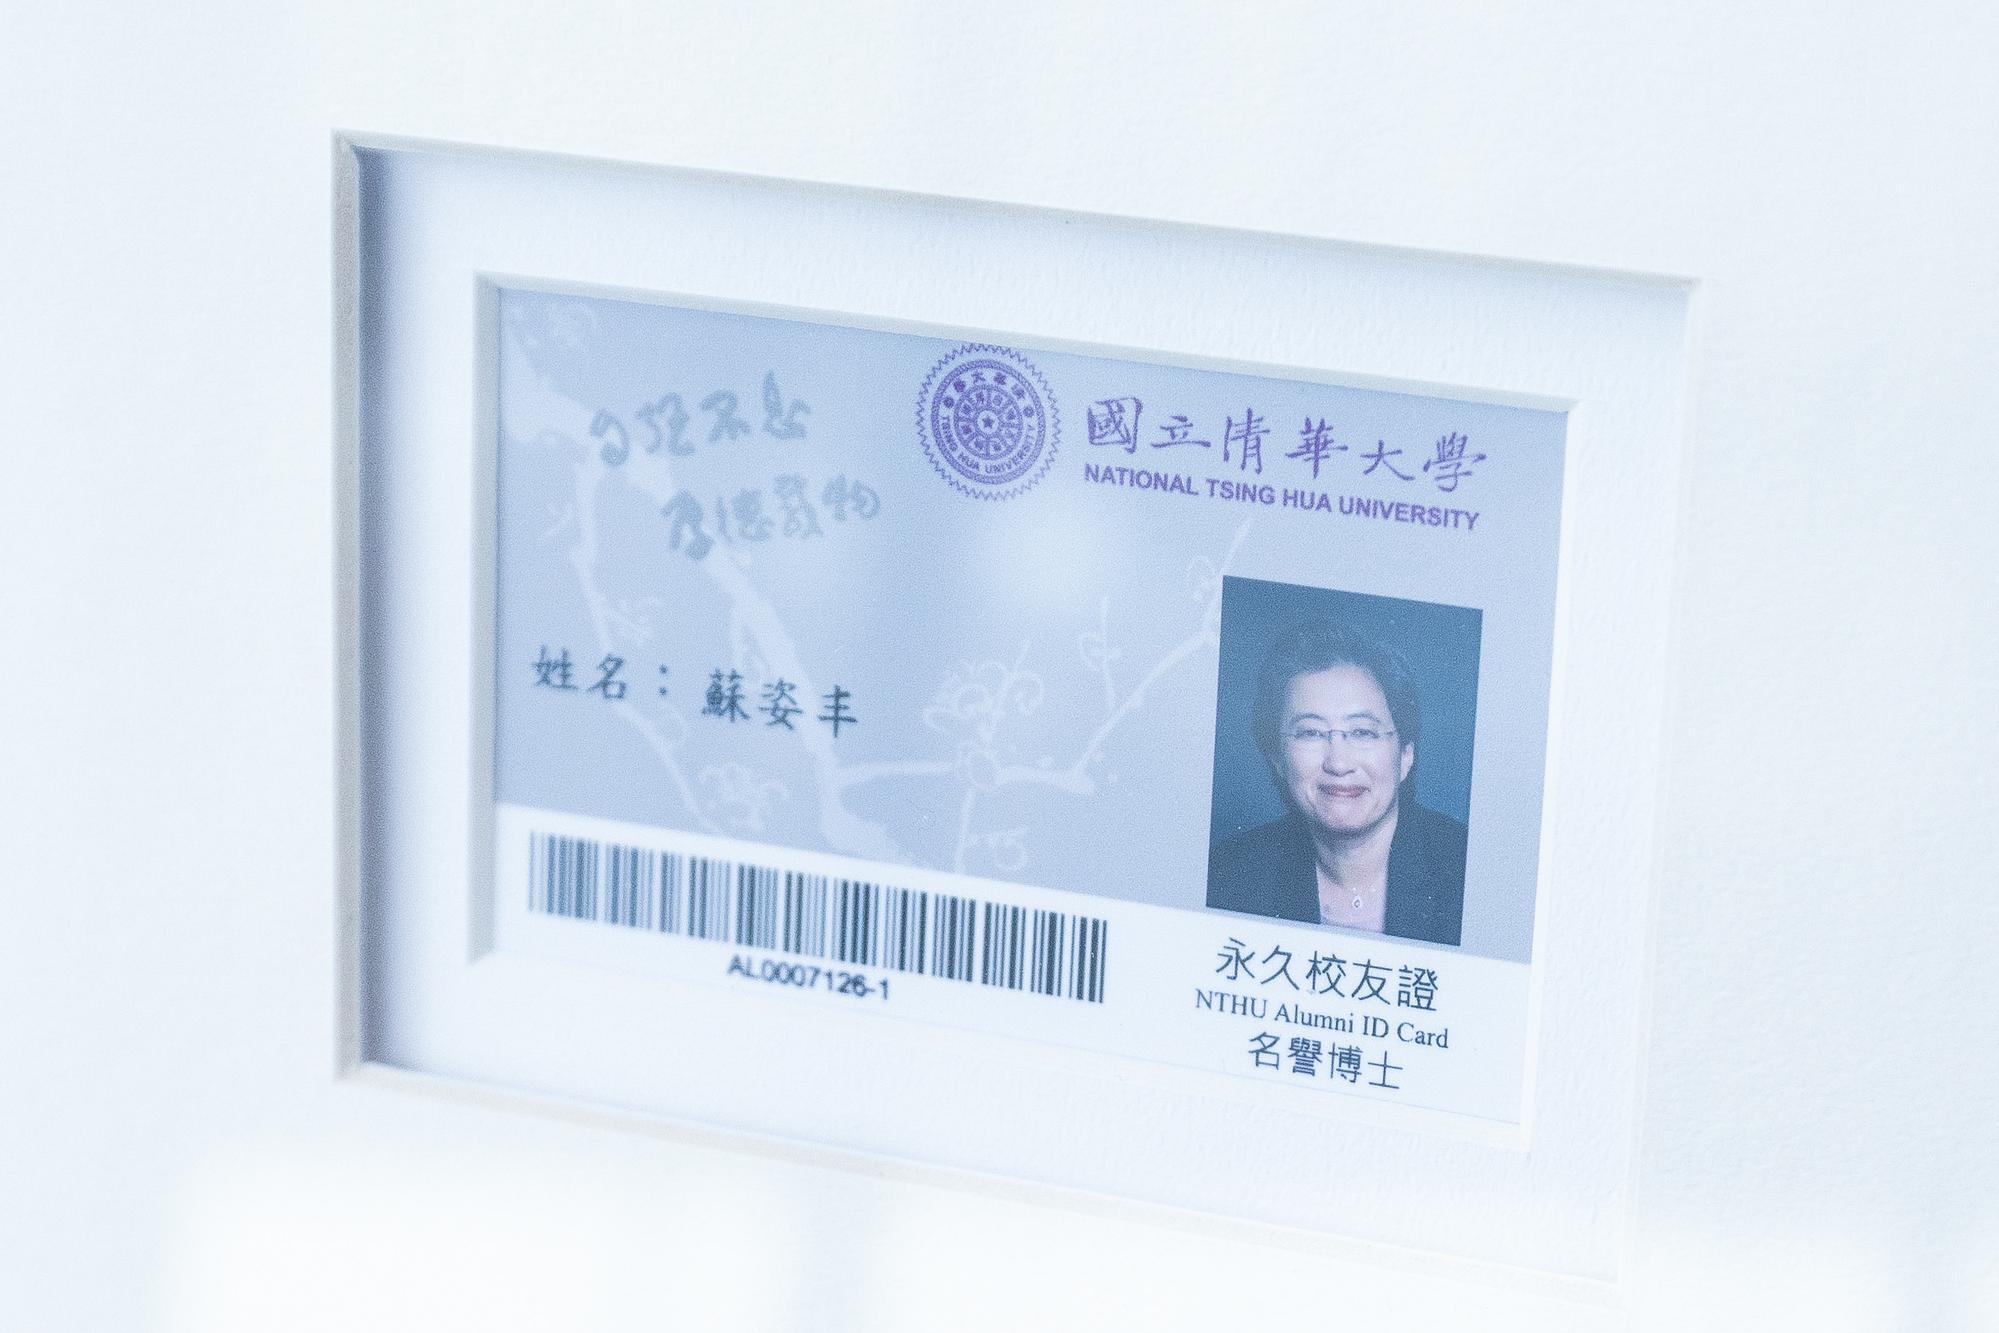 NTHU presented a Permanent Alumni Card to Honorary Doctor Lisa Su (蘇姿丰).